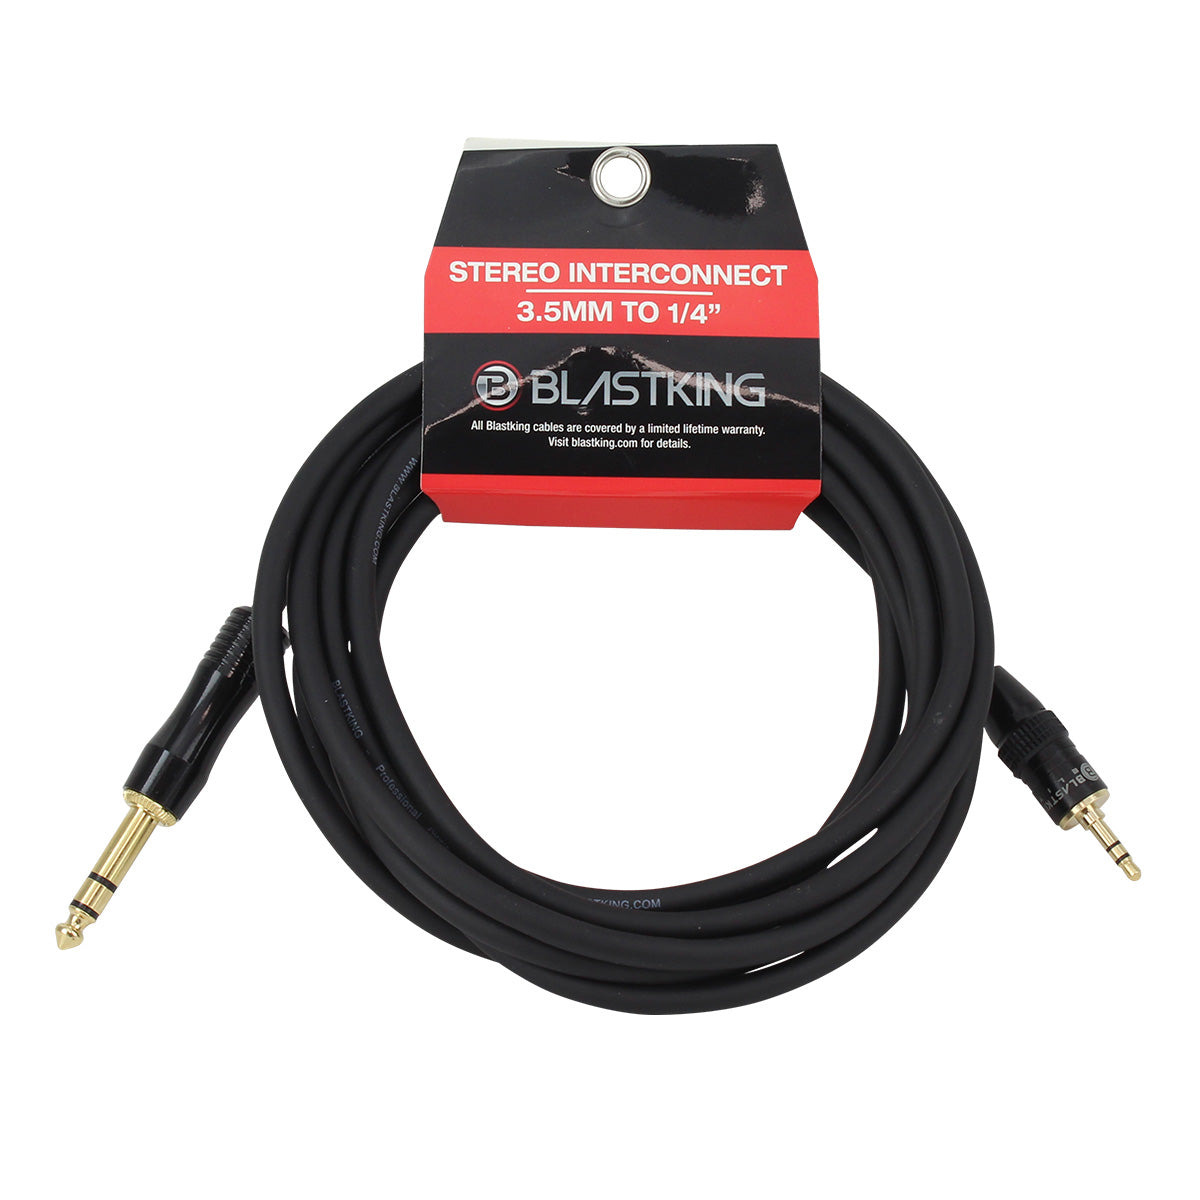 Blastking CQ35B-25 Stereo Interconnect 3.5mm to 1/4" - 25 Ft